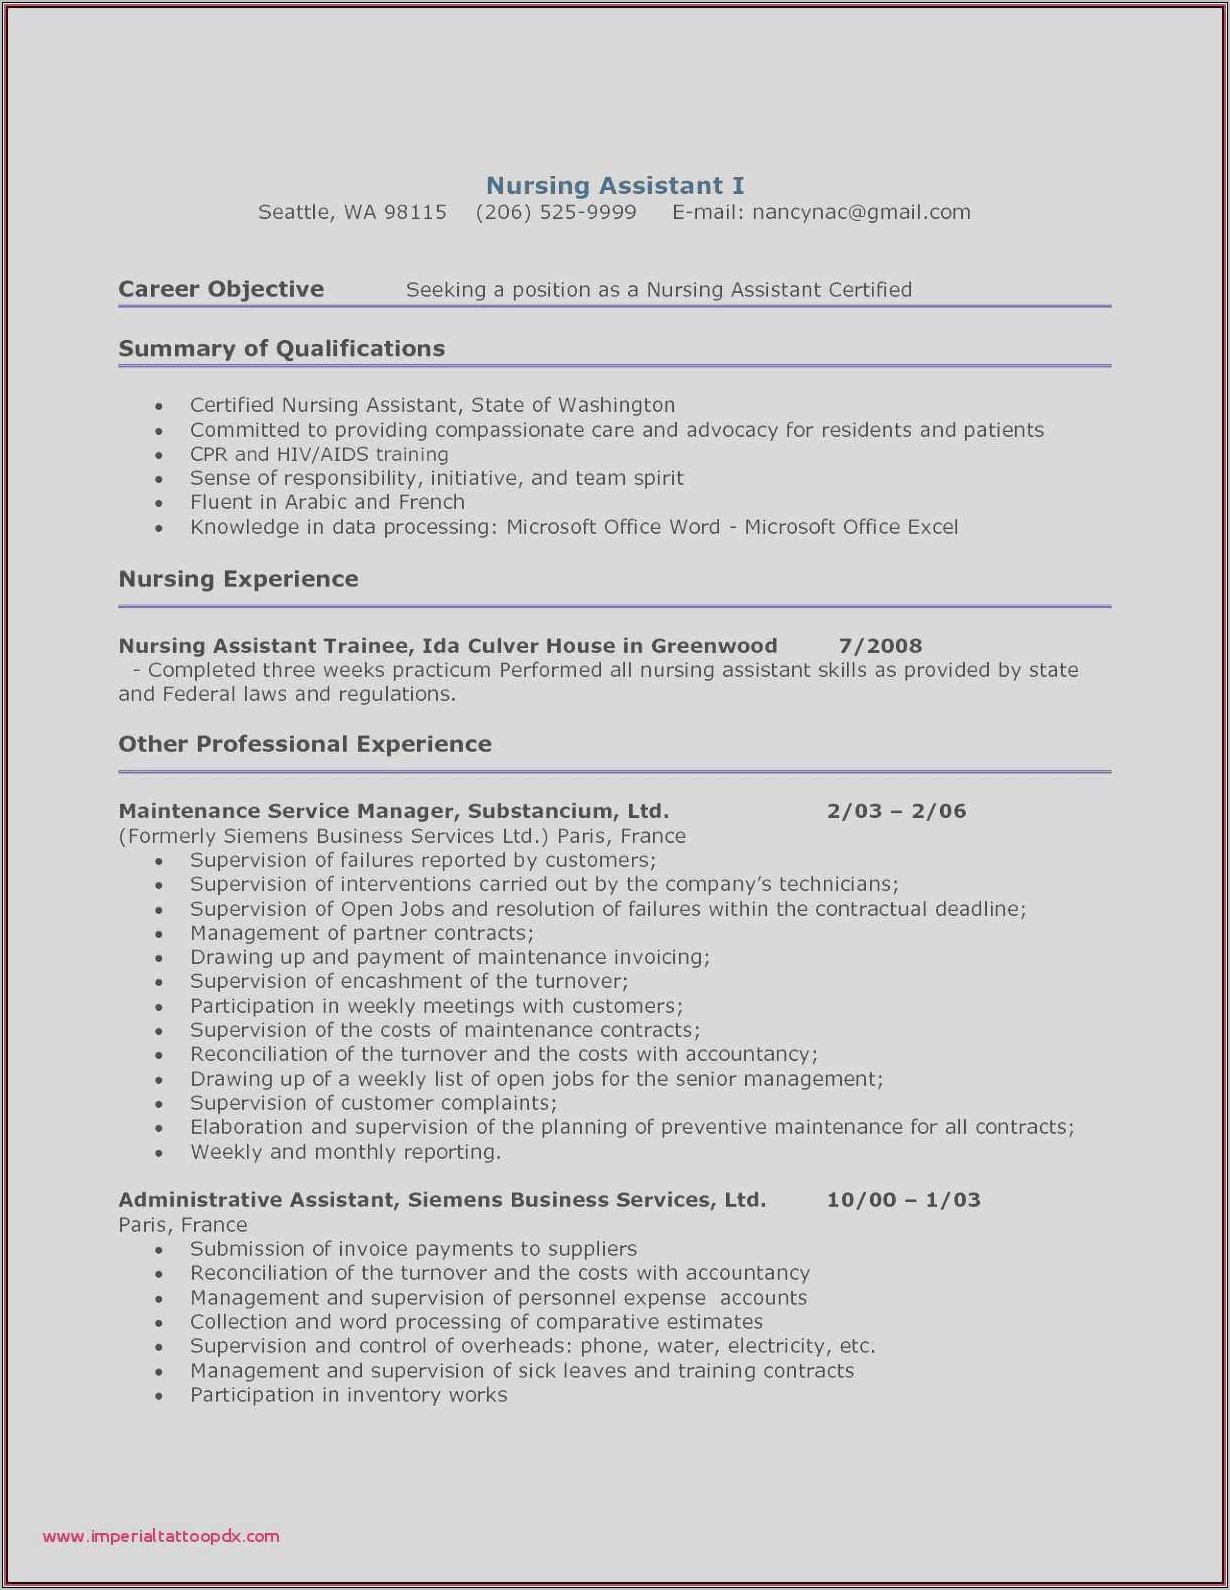 Resume For Nursing Assistant Template